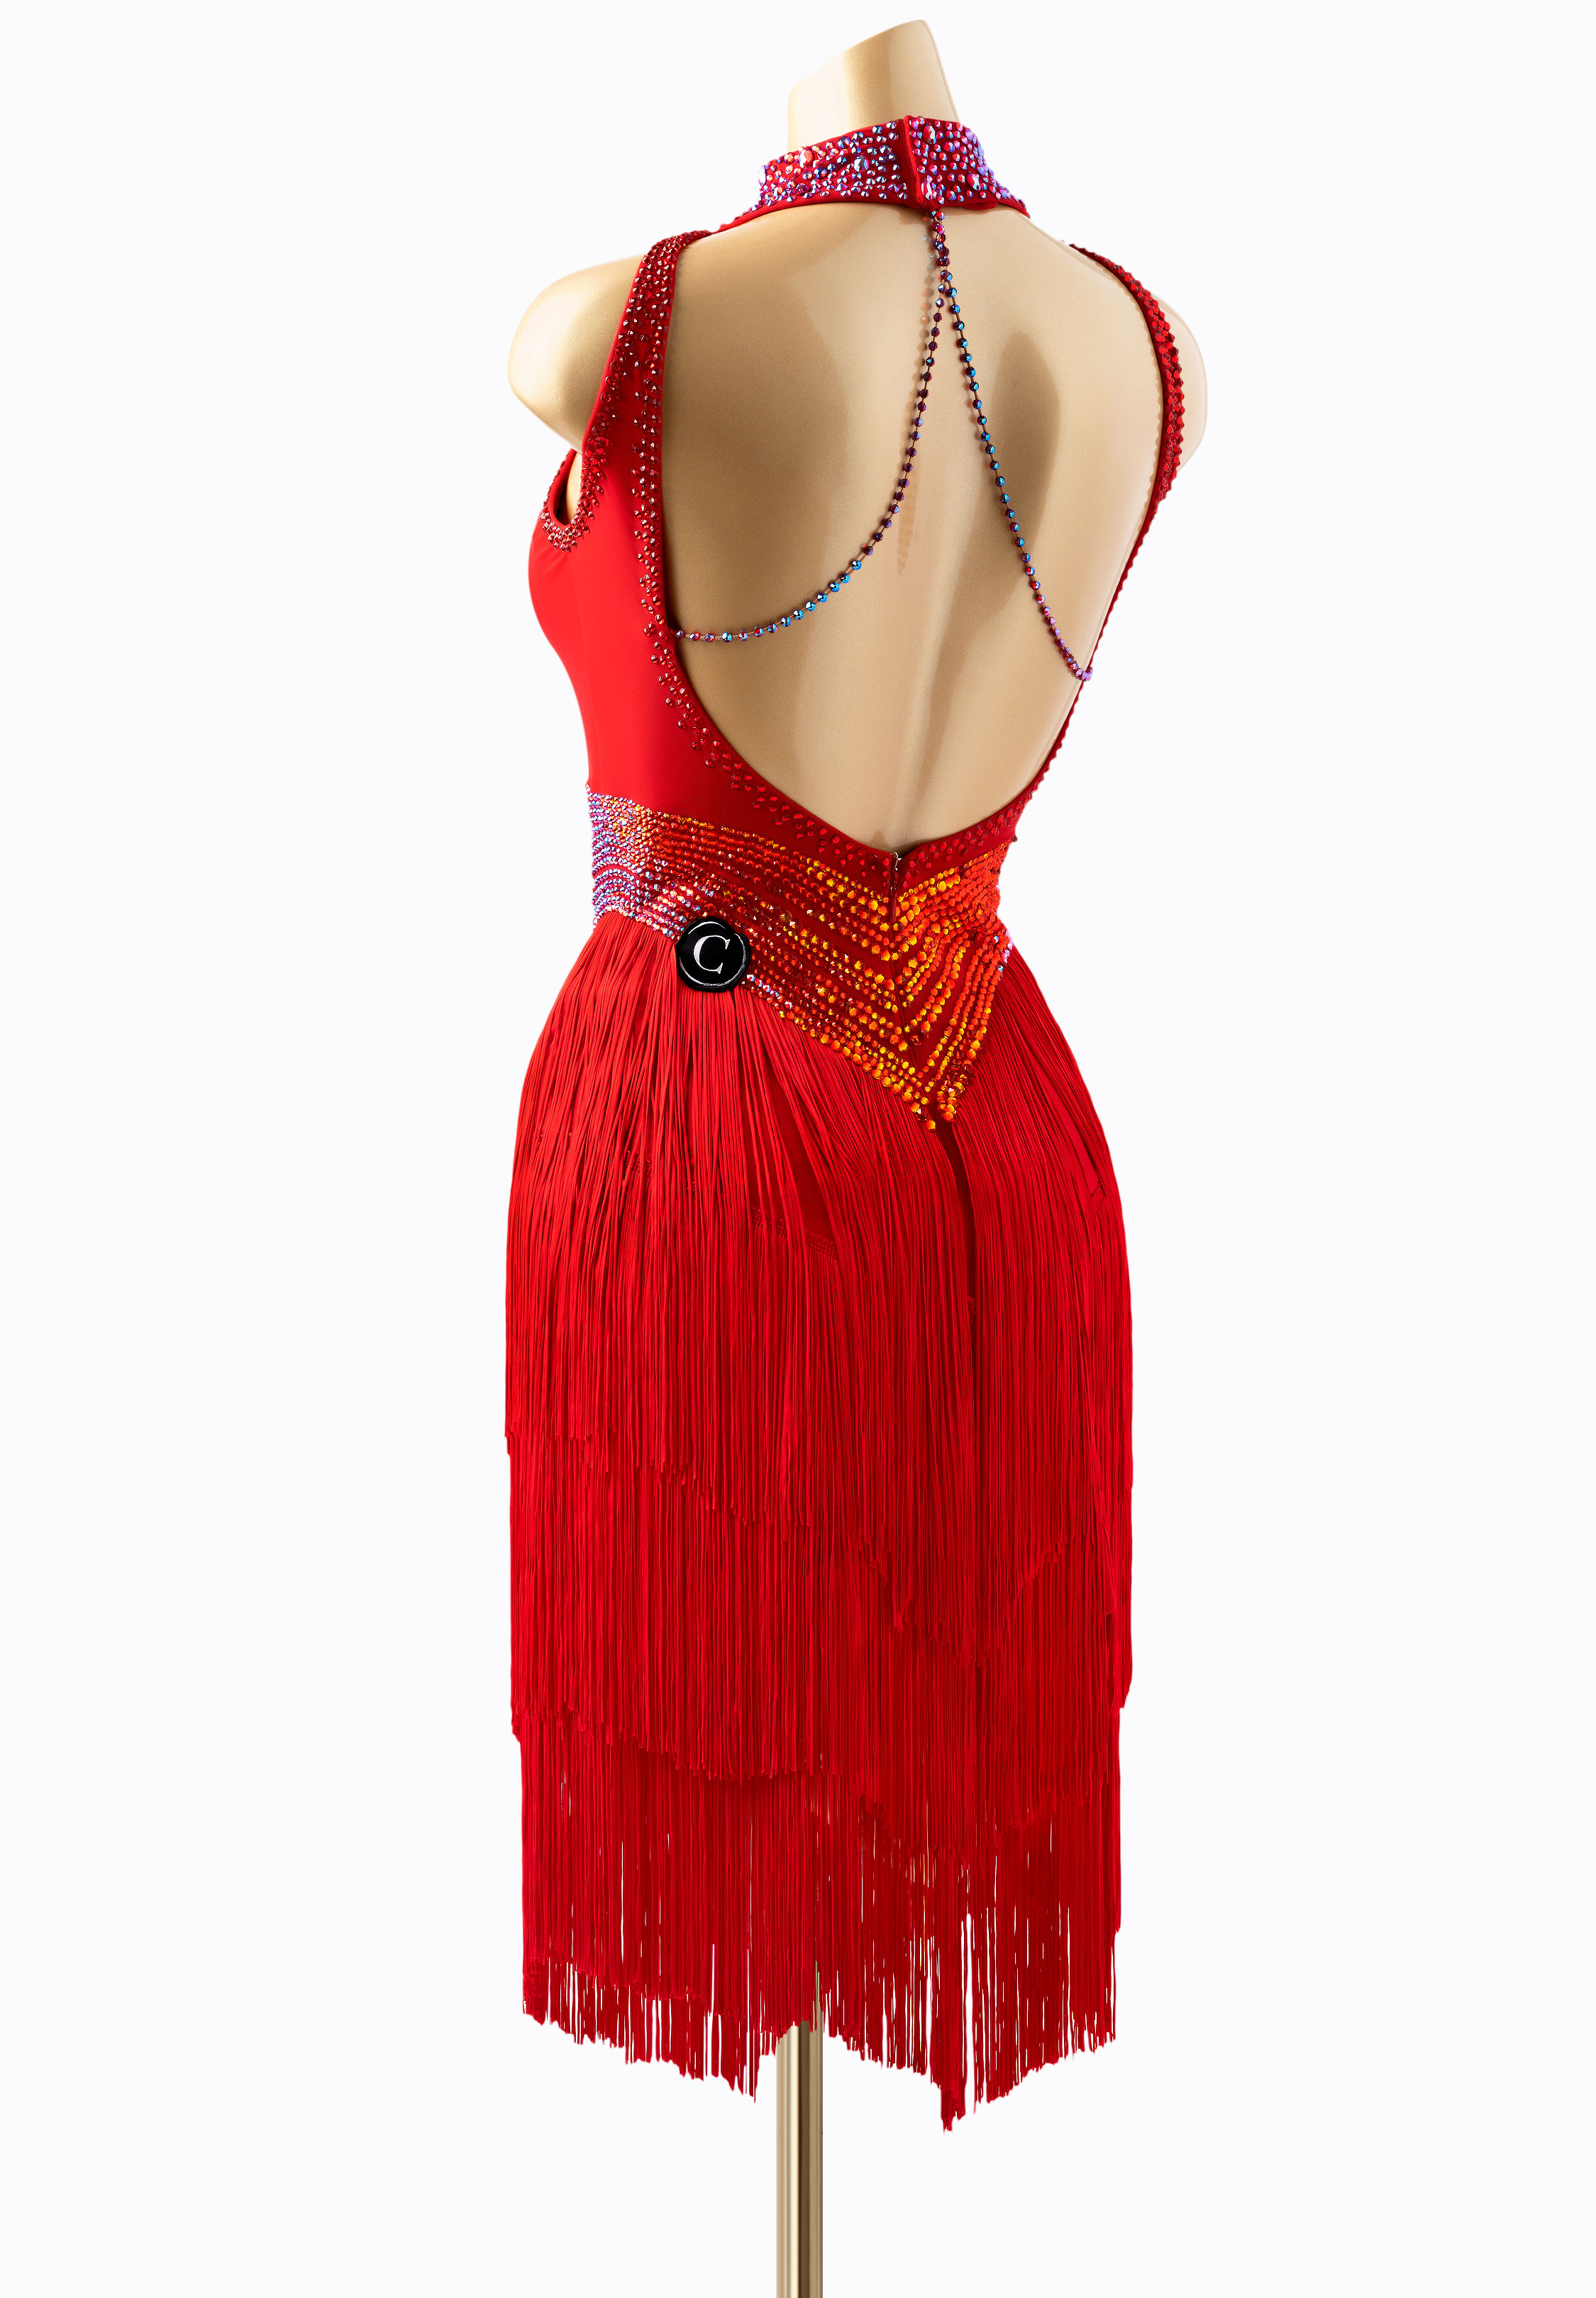 Chrisanne Clover Couture Latin Dress 147PP | International Latin